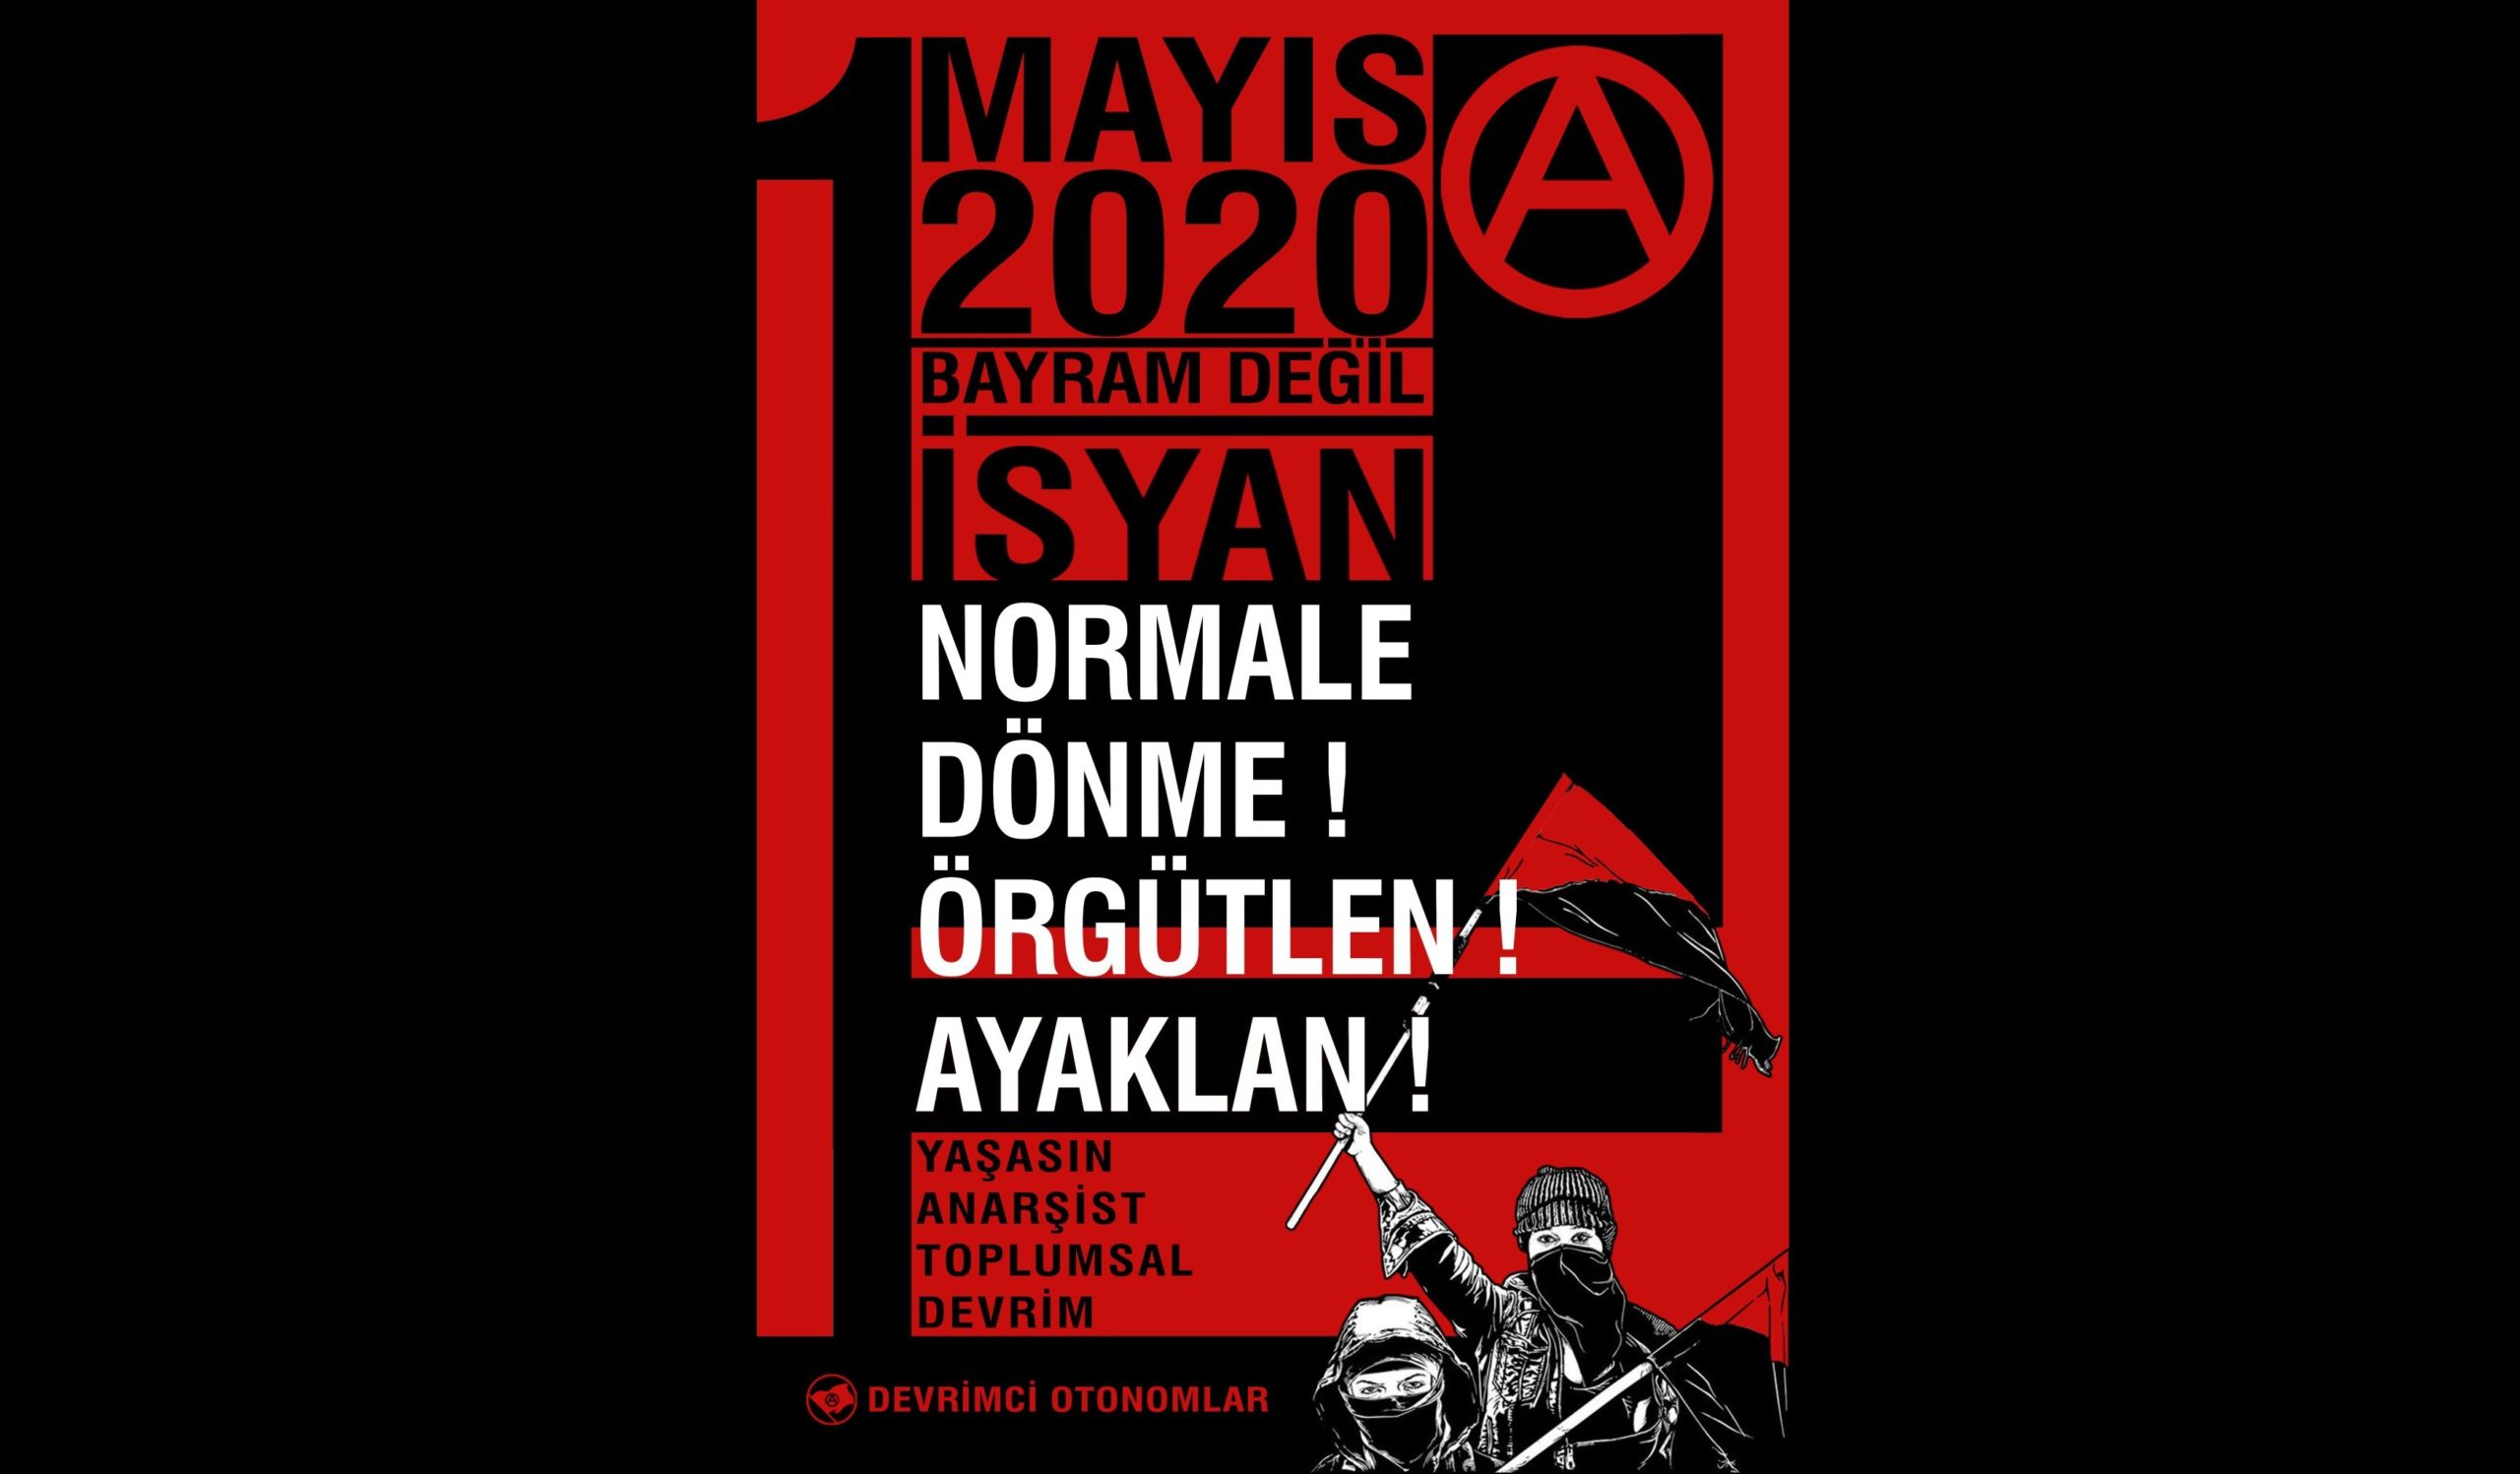 We must weave the global revolutionary struggle line against the global epidemic! – Devrimci Otonomlar (Revolutionary Autonomous)